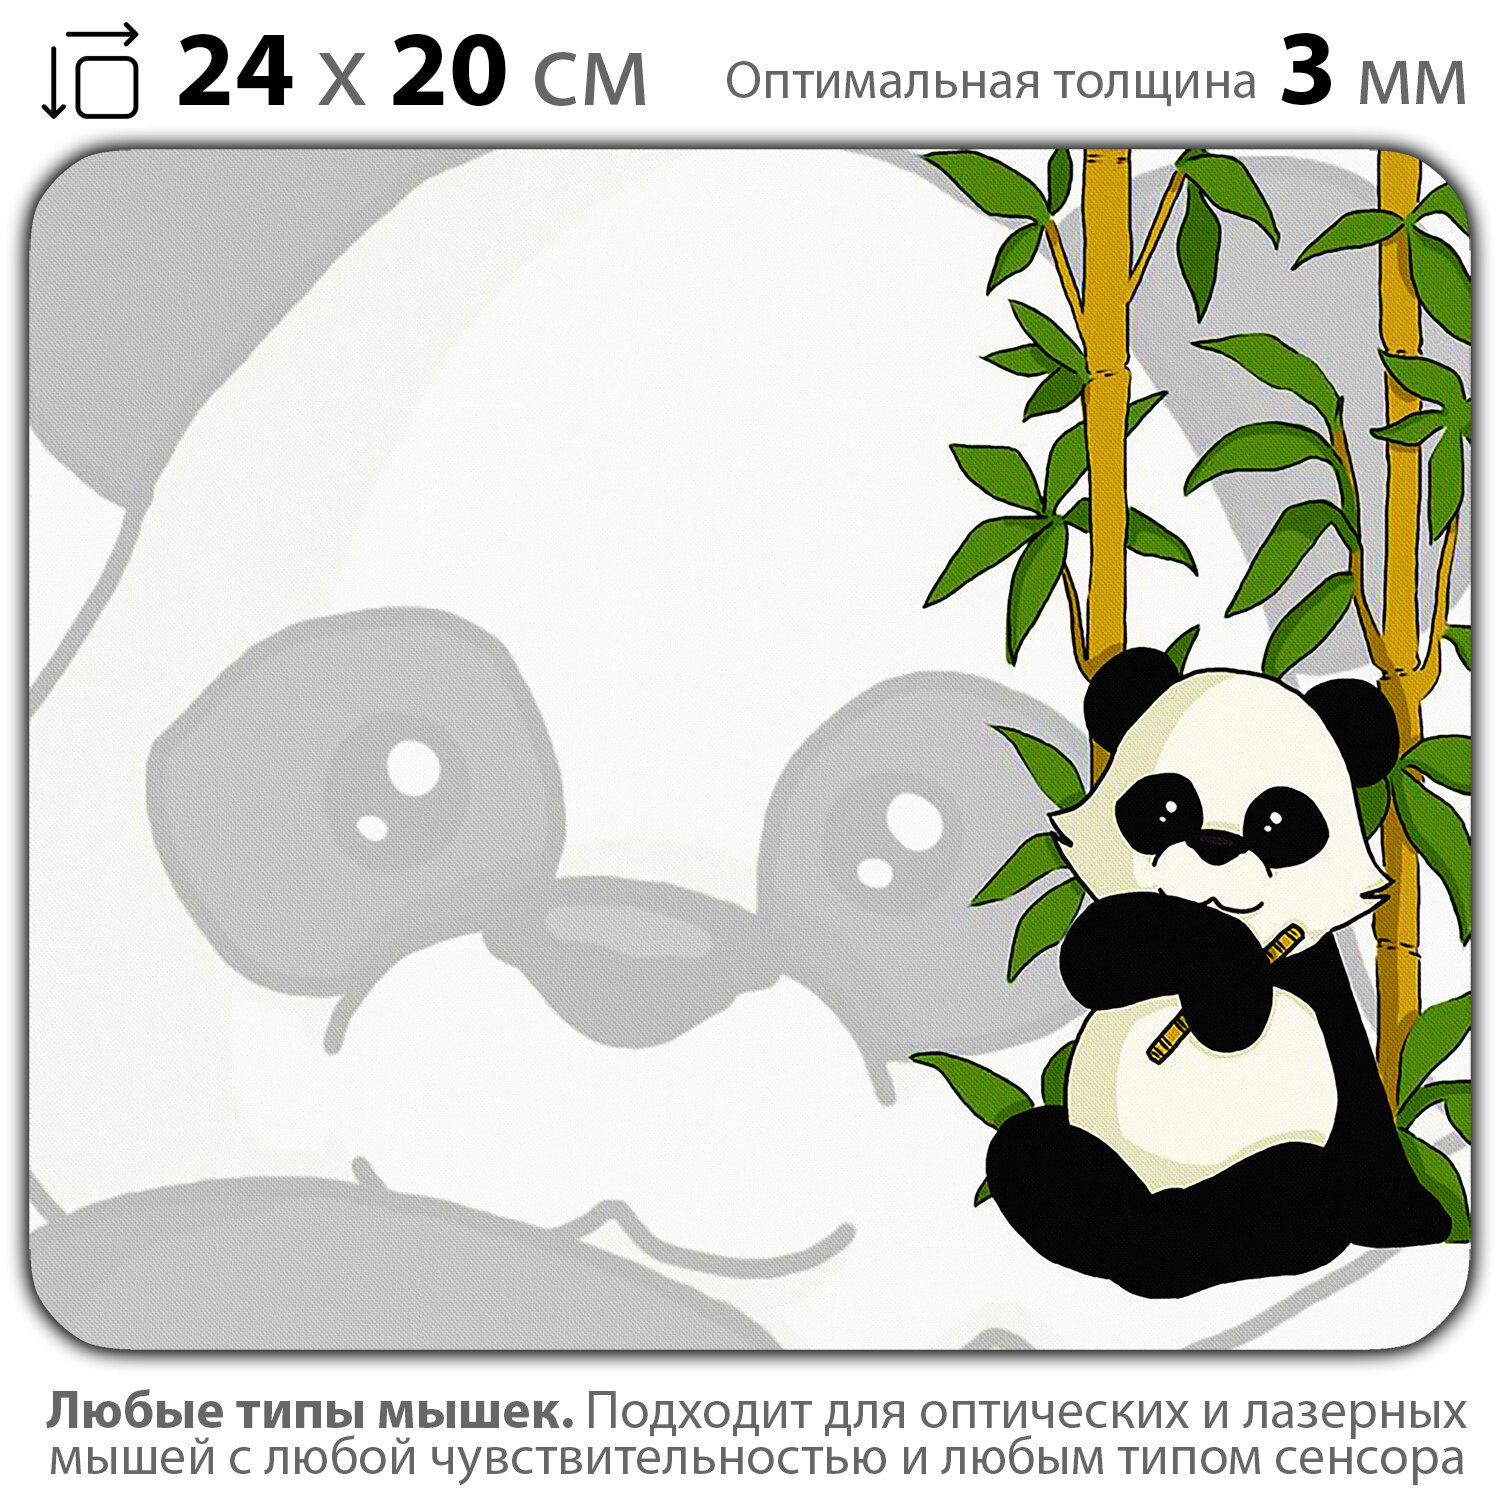 Коврик для мыши "Милая панда и бамбук" (24 x 20 см x 3 мм)